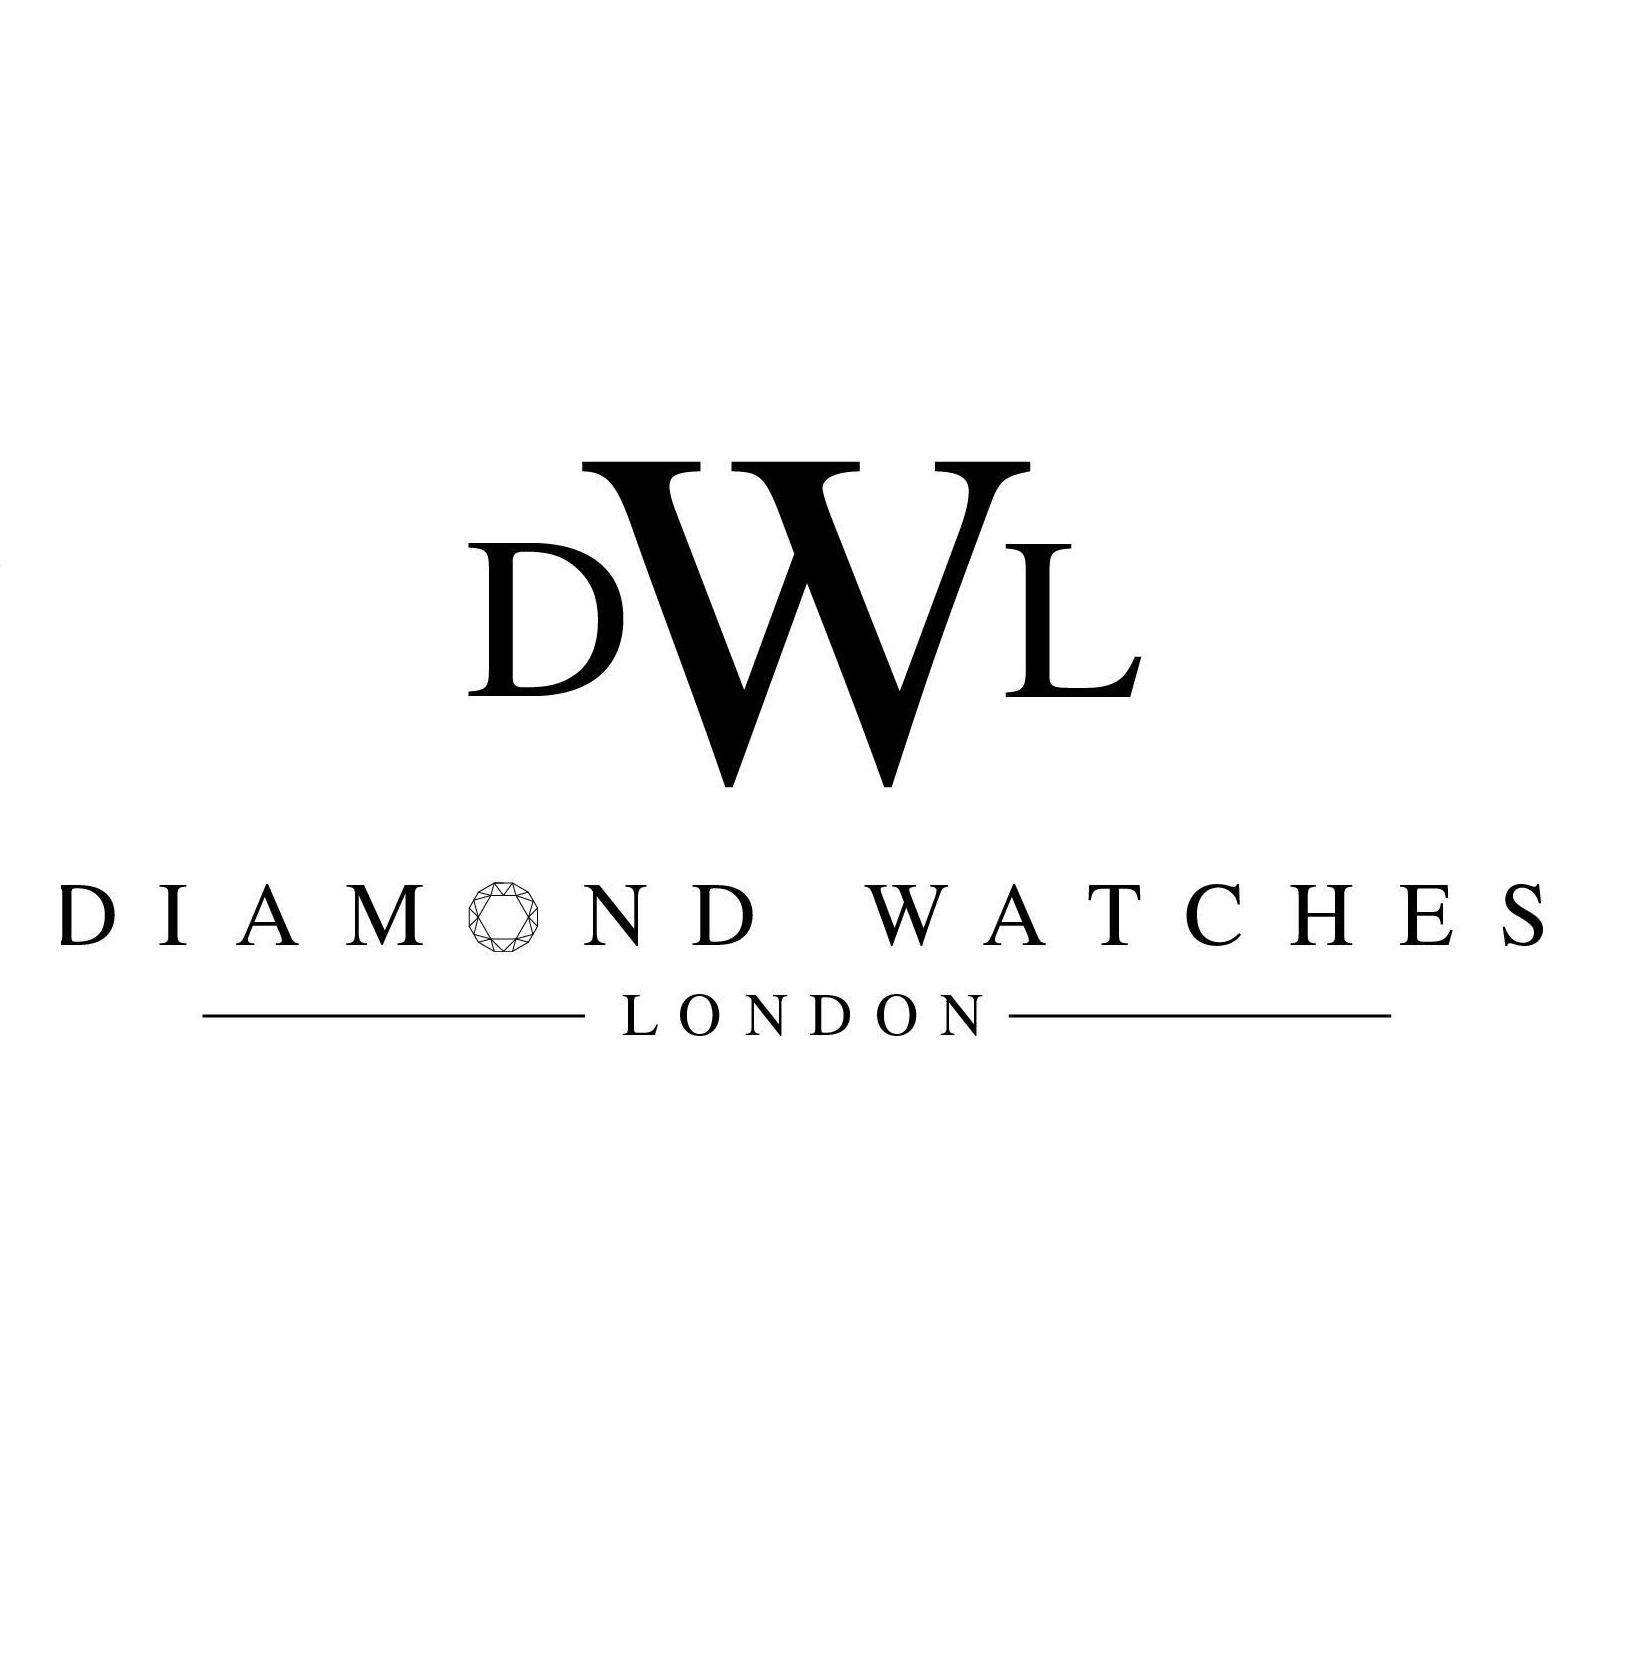 The Watch Exchange London - MondaniWeb